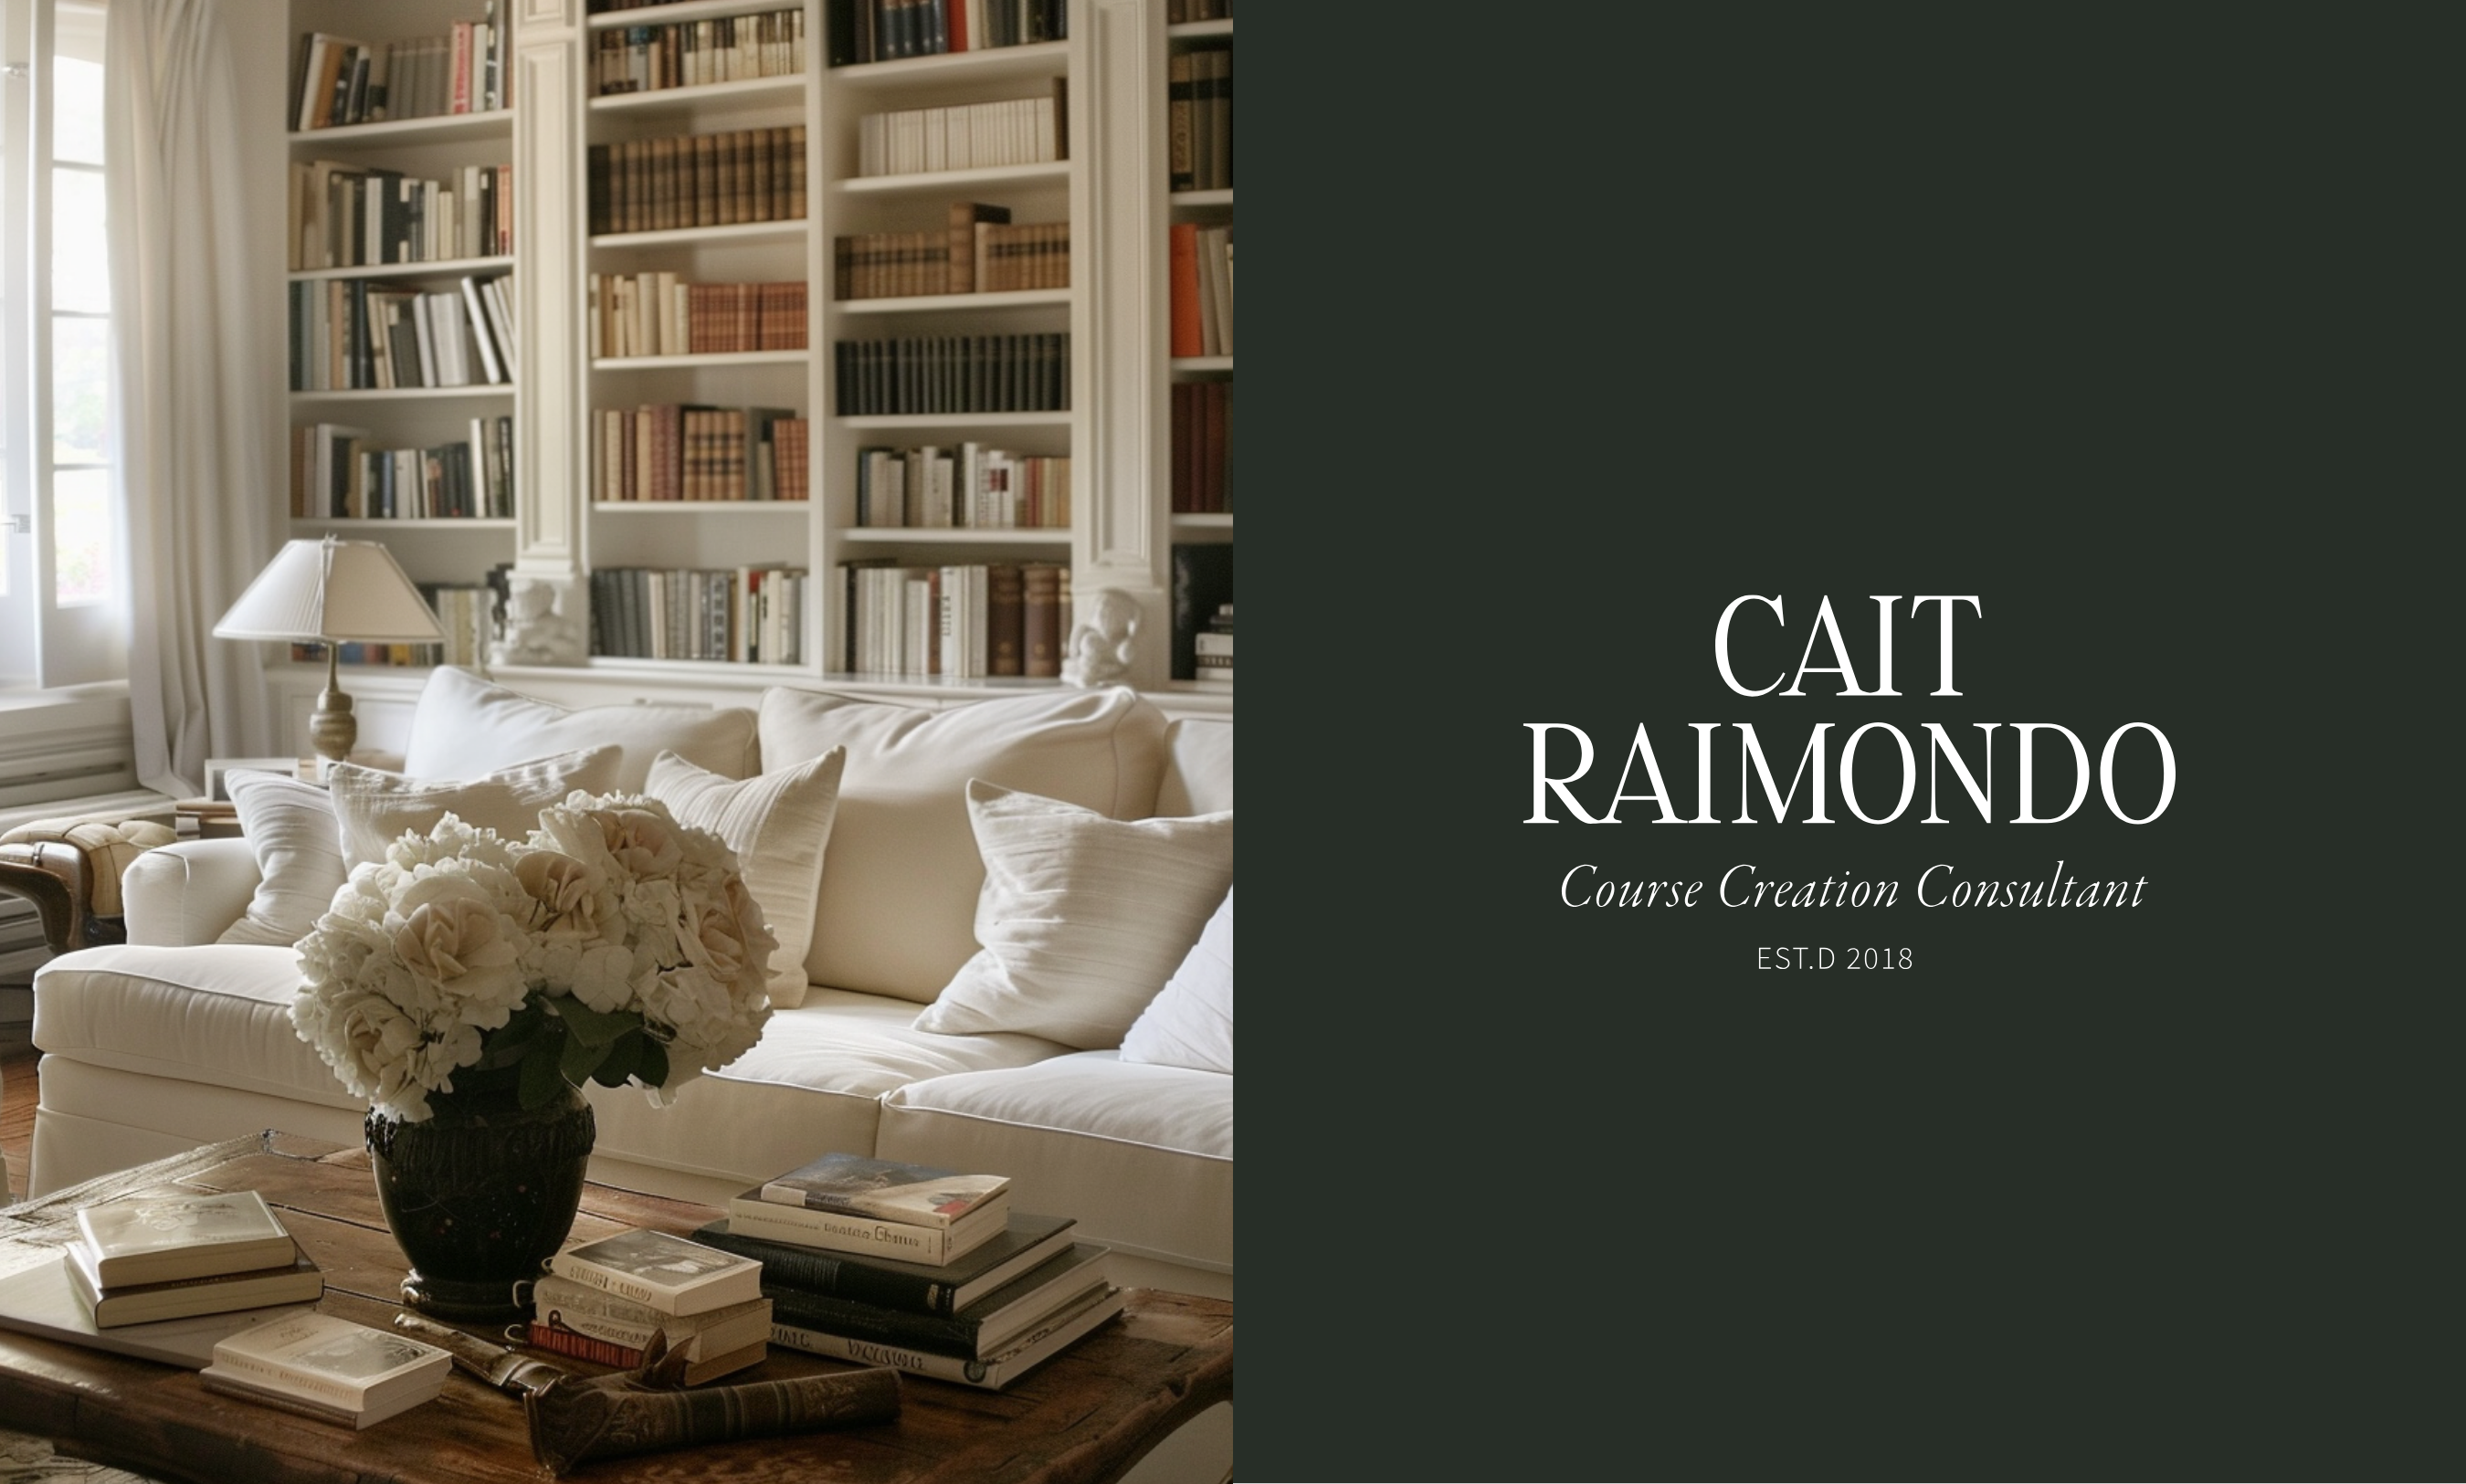 Cait Raimondo - Course Creator Brand - Academic Literary Inspired Brand Design by Sarah Ann Design